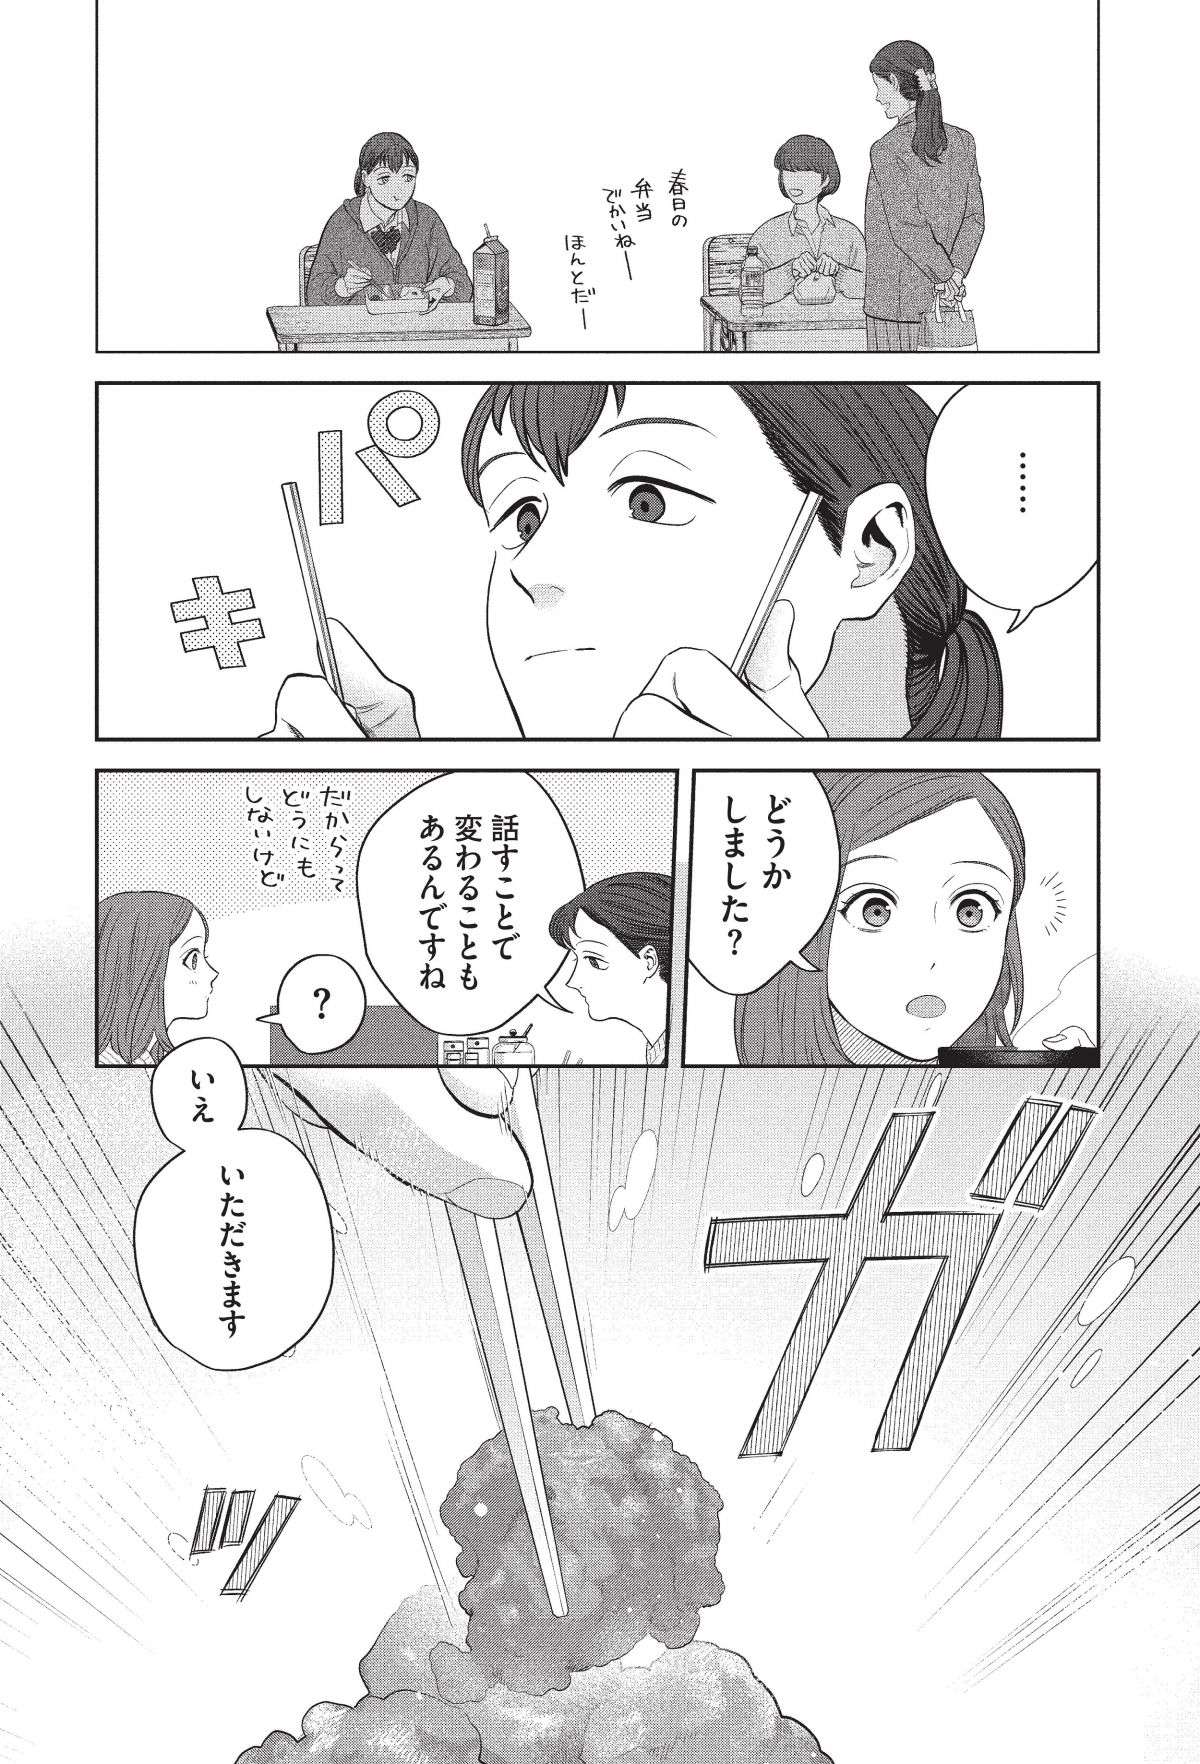 tsukutabe2.4-9.jpg